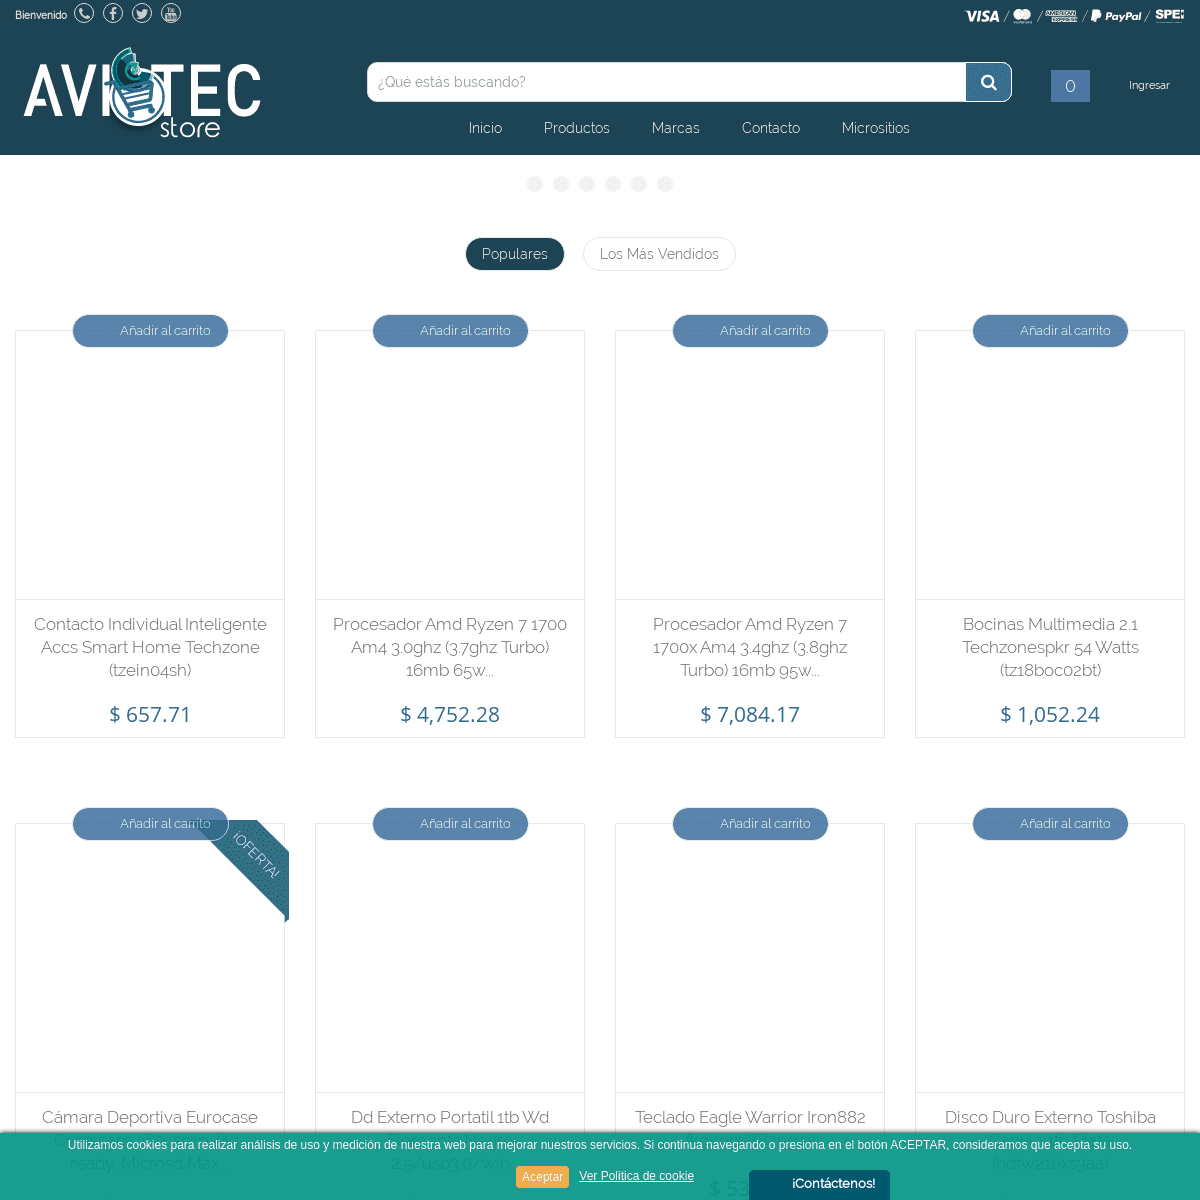 A complete backup of avitecstore.com